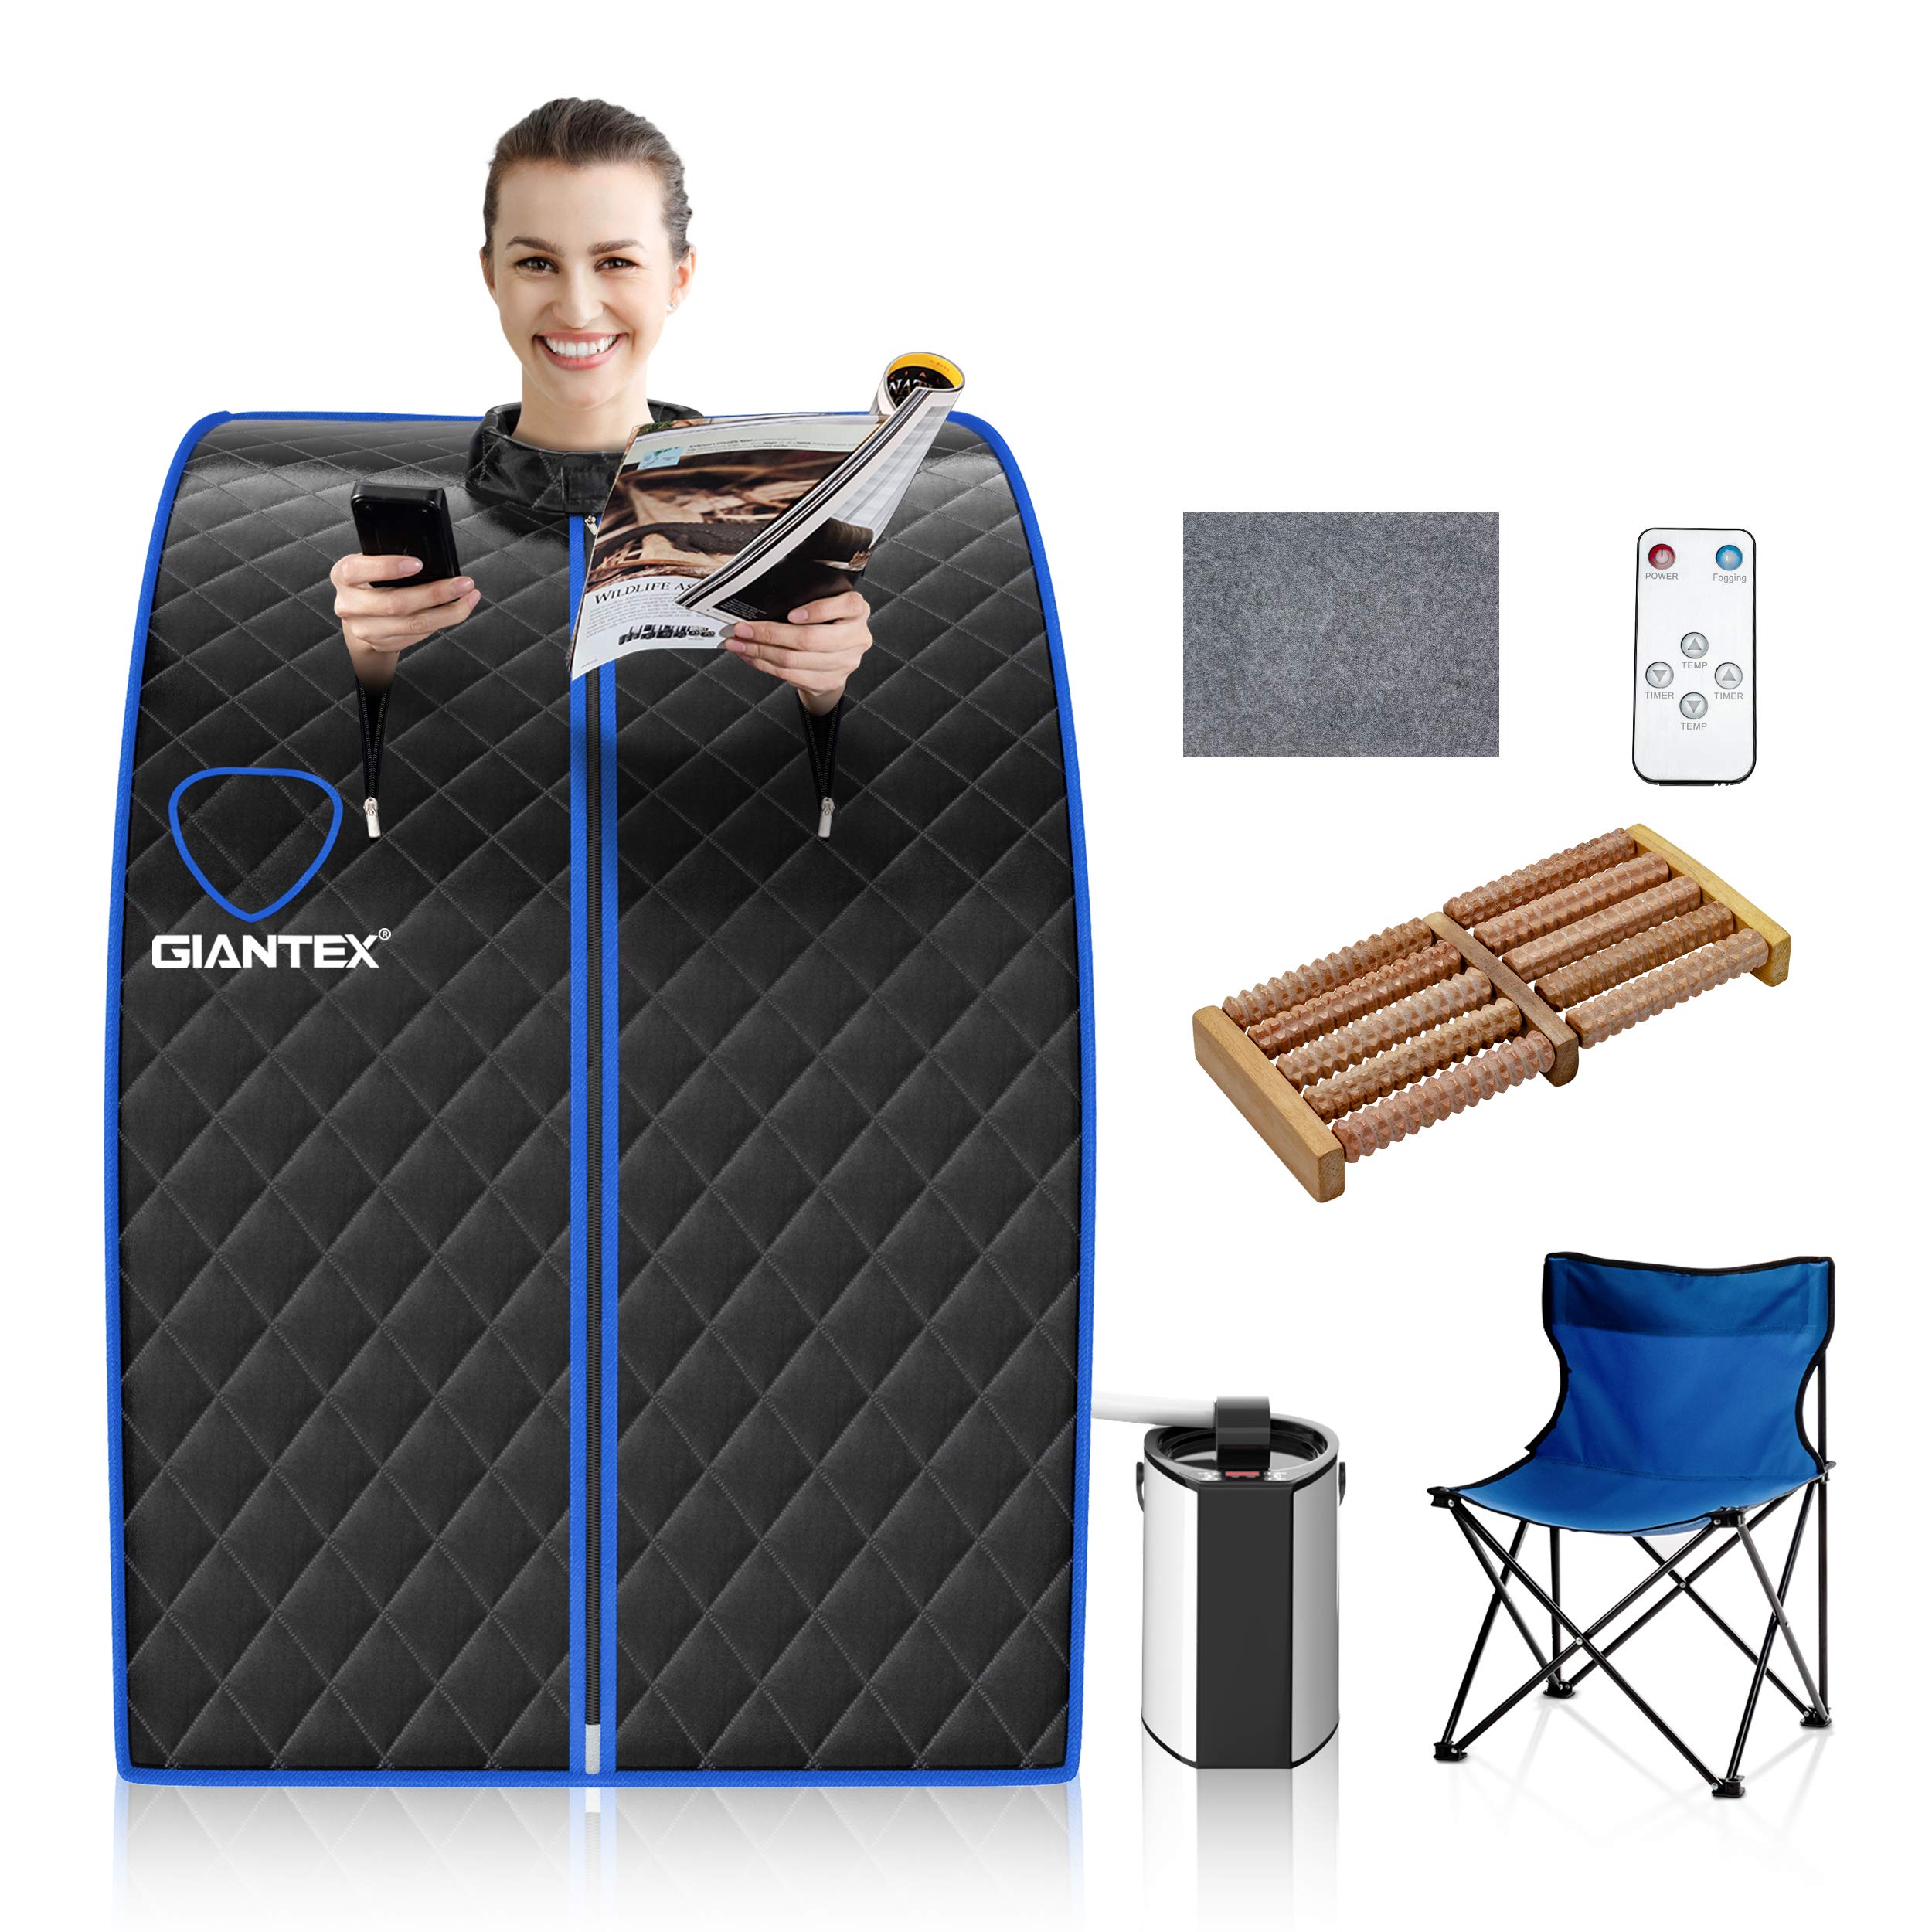 Giantex Portable Steam Sauna, Personal Therapeutic Sauna for Detox, Temperature & Timer Adjustable